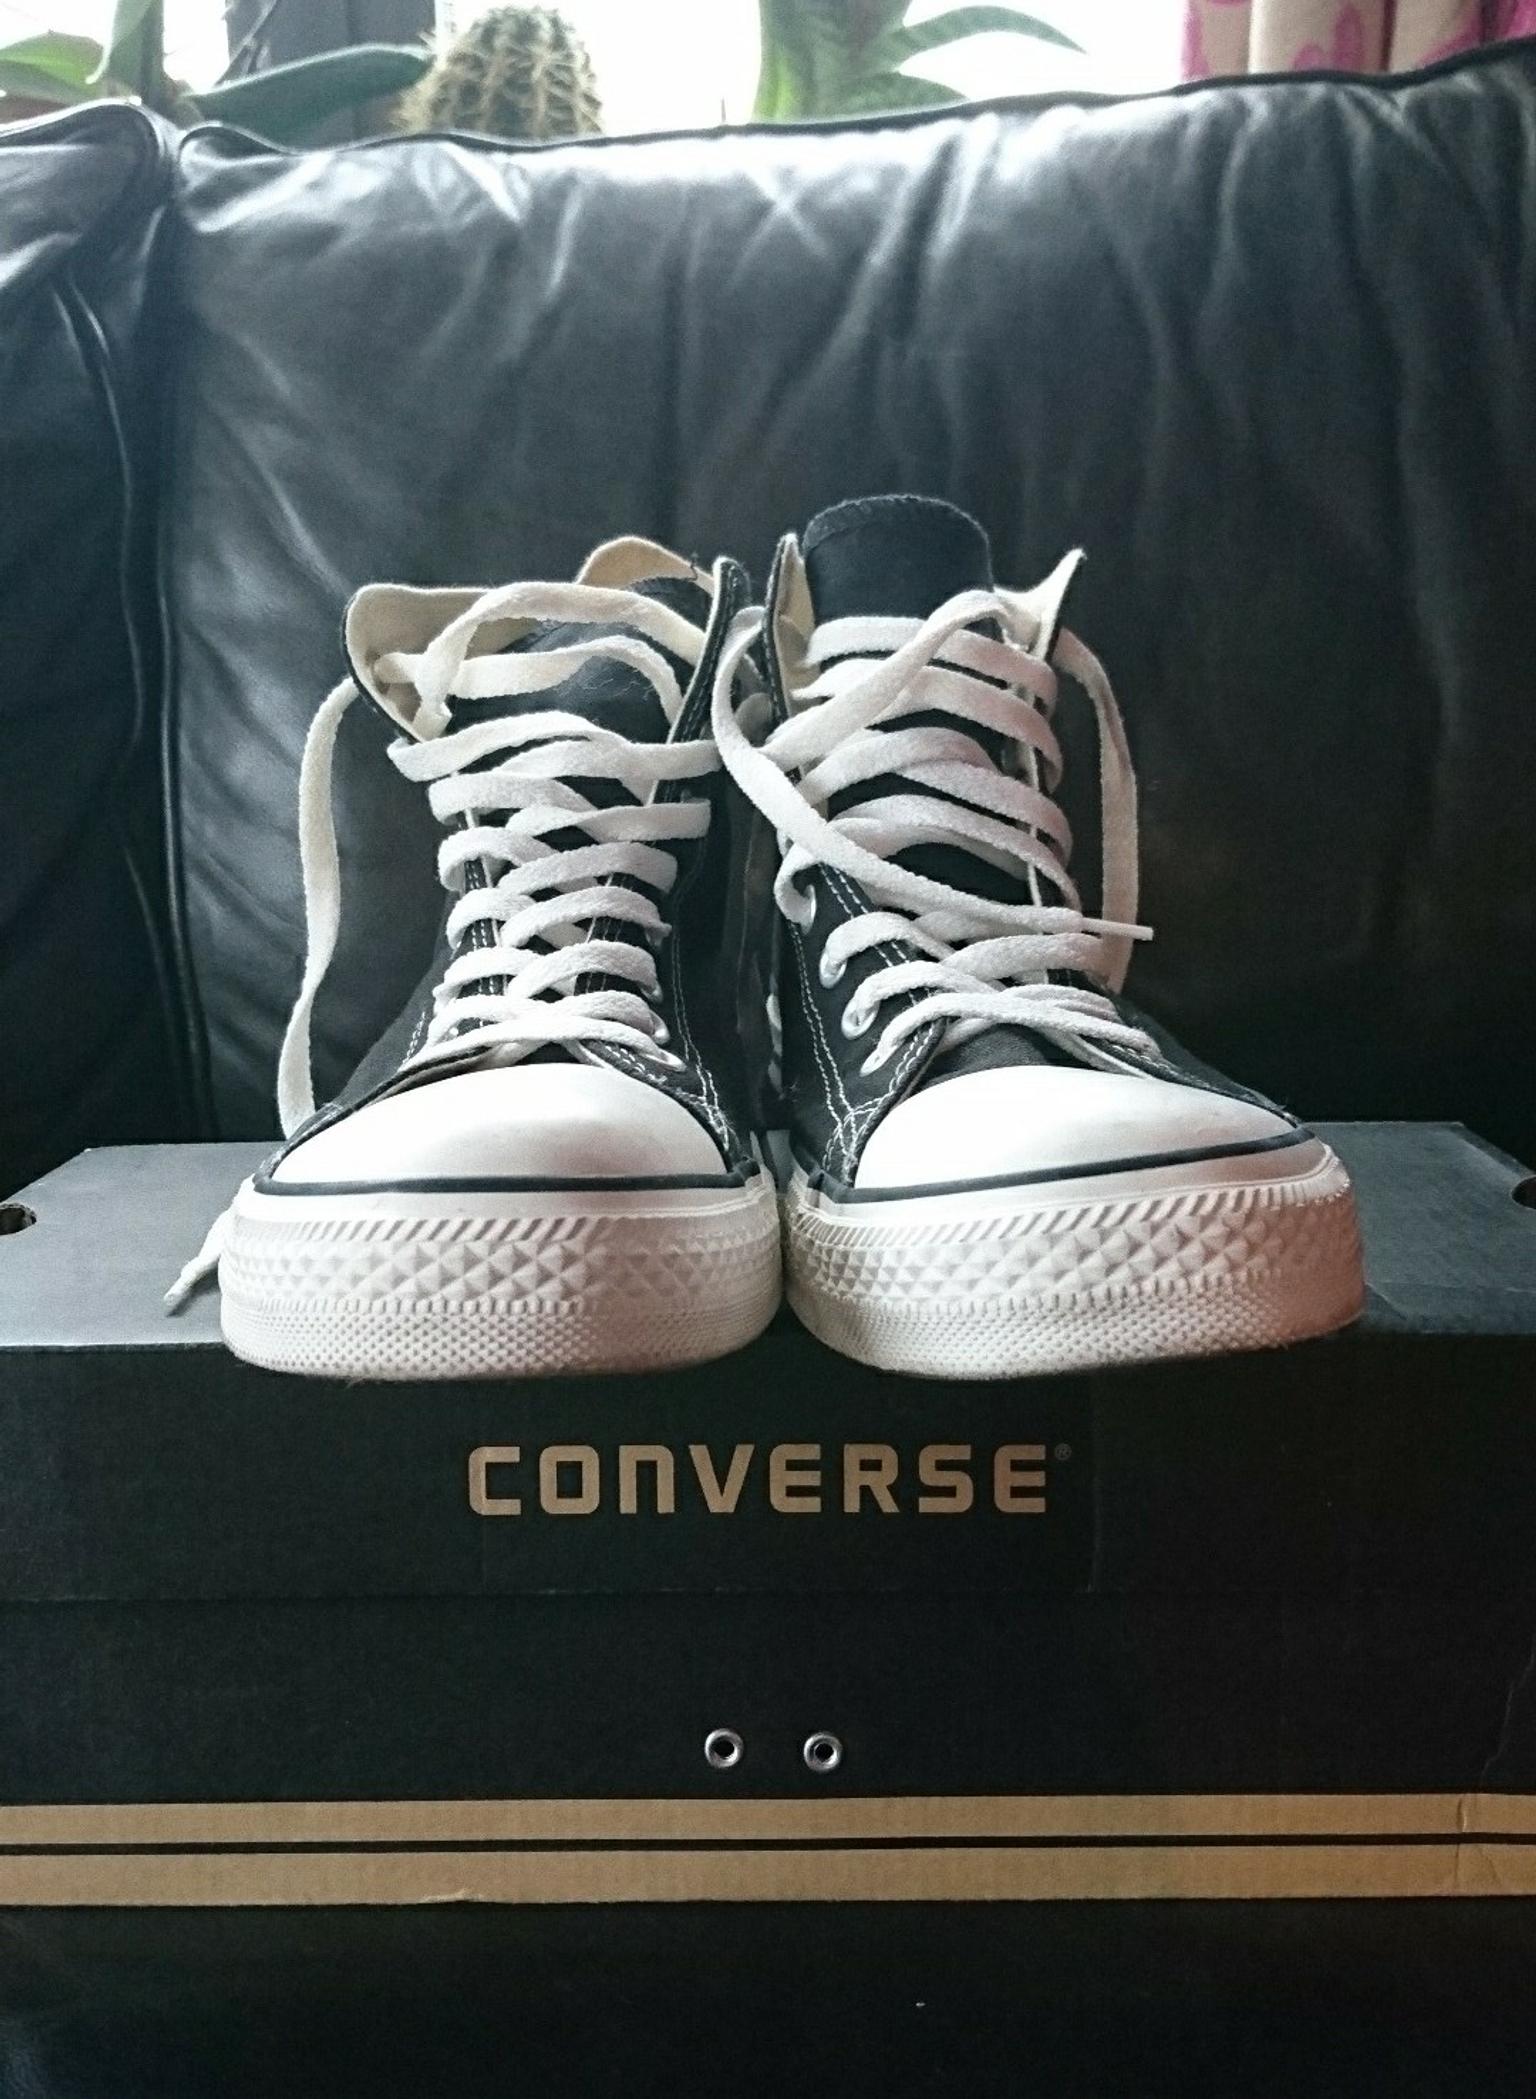 converse for flat feet